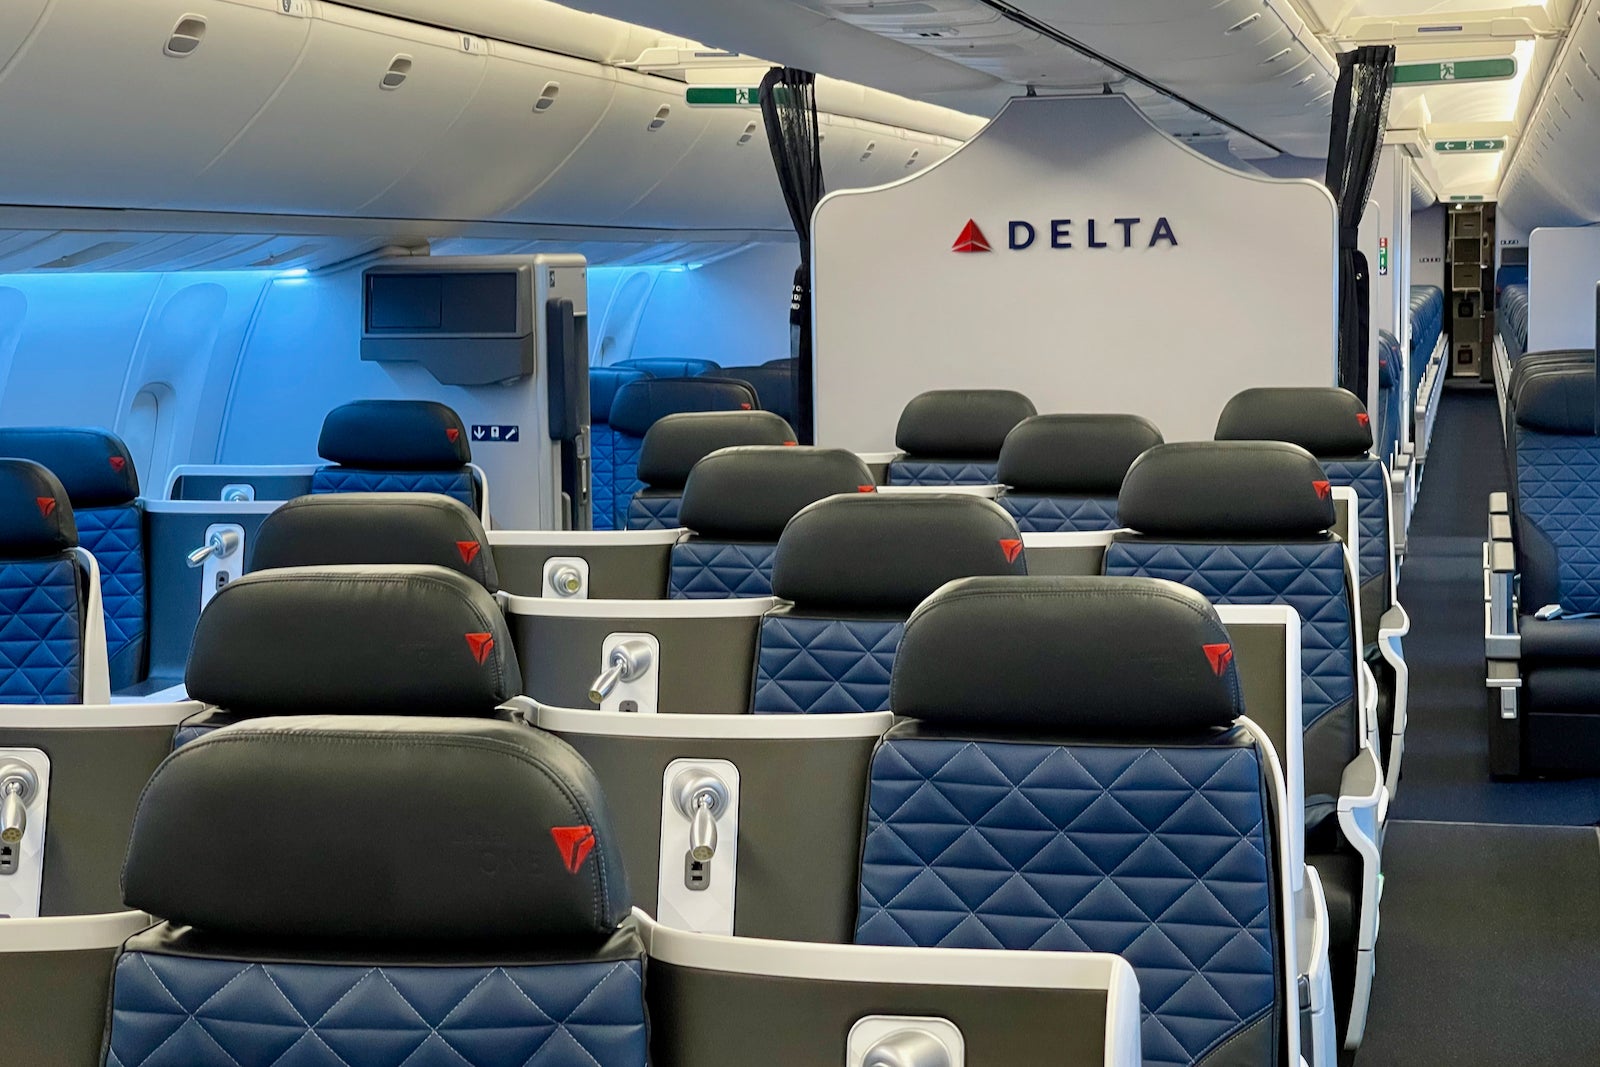 Flight Review Delta Airlines Comfort Plus Class Boeing 767-300ER